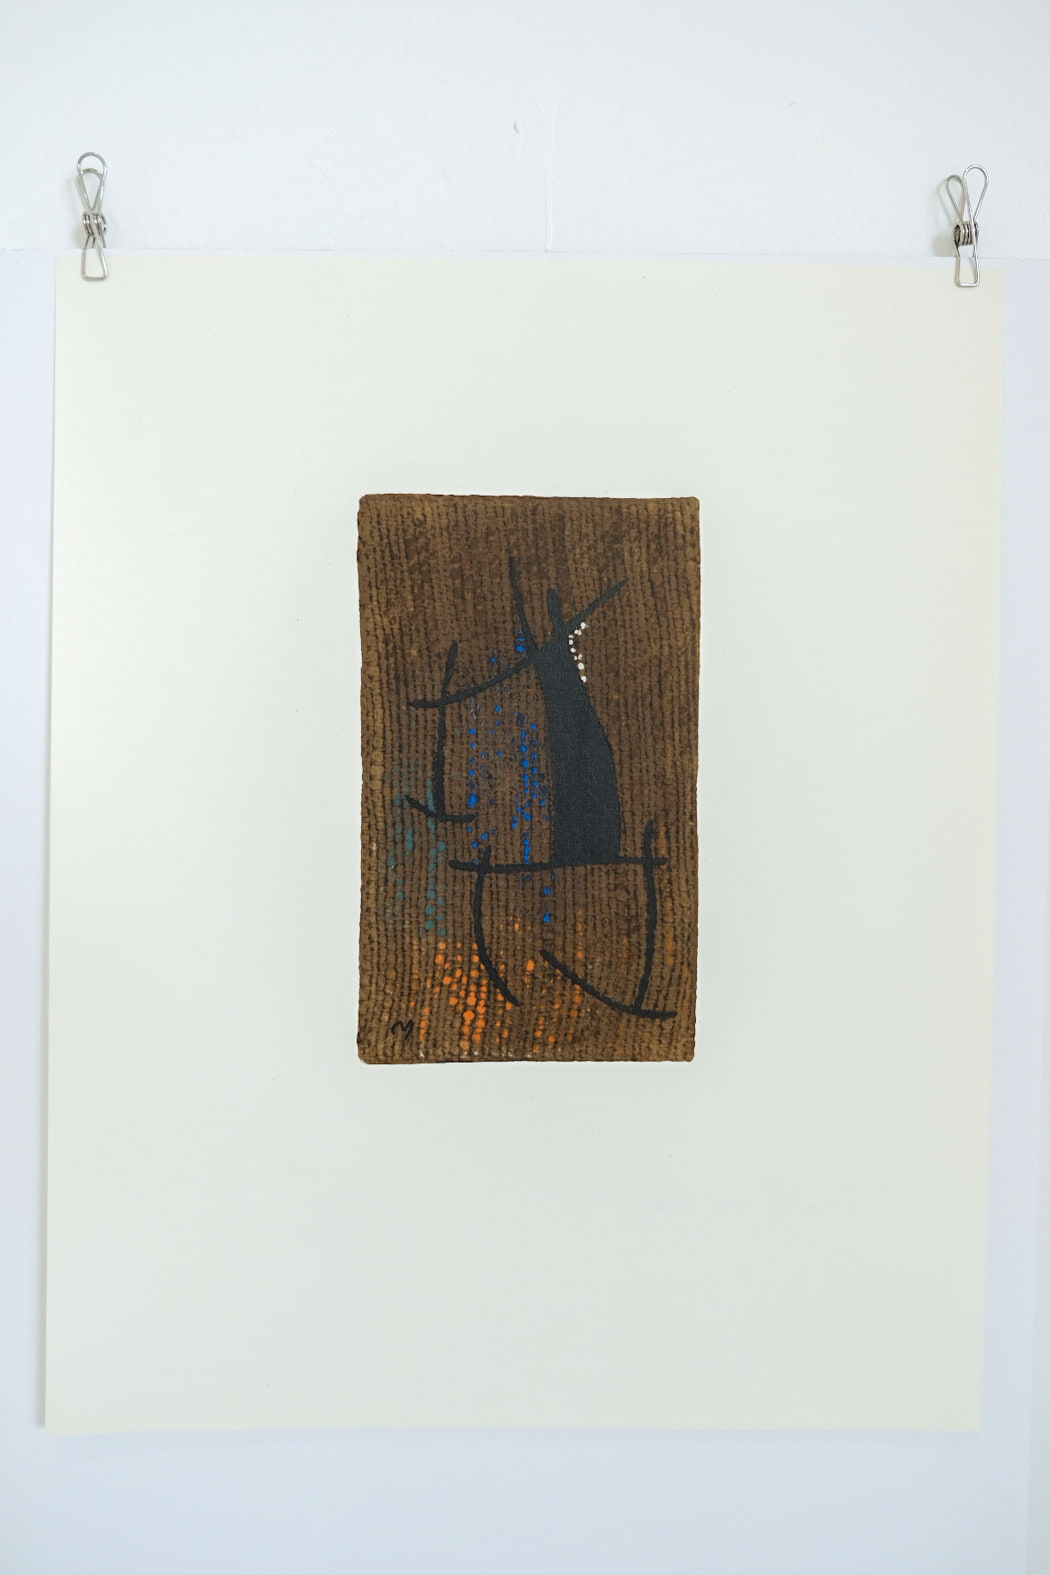 Joan Miro FEMME I/VI Plate #1